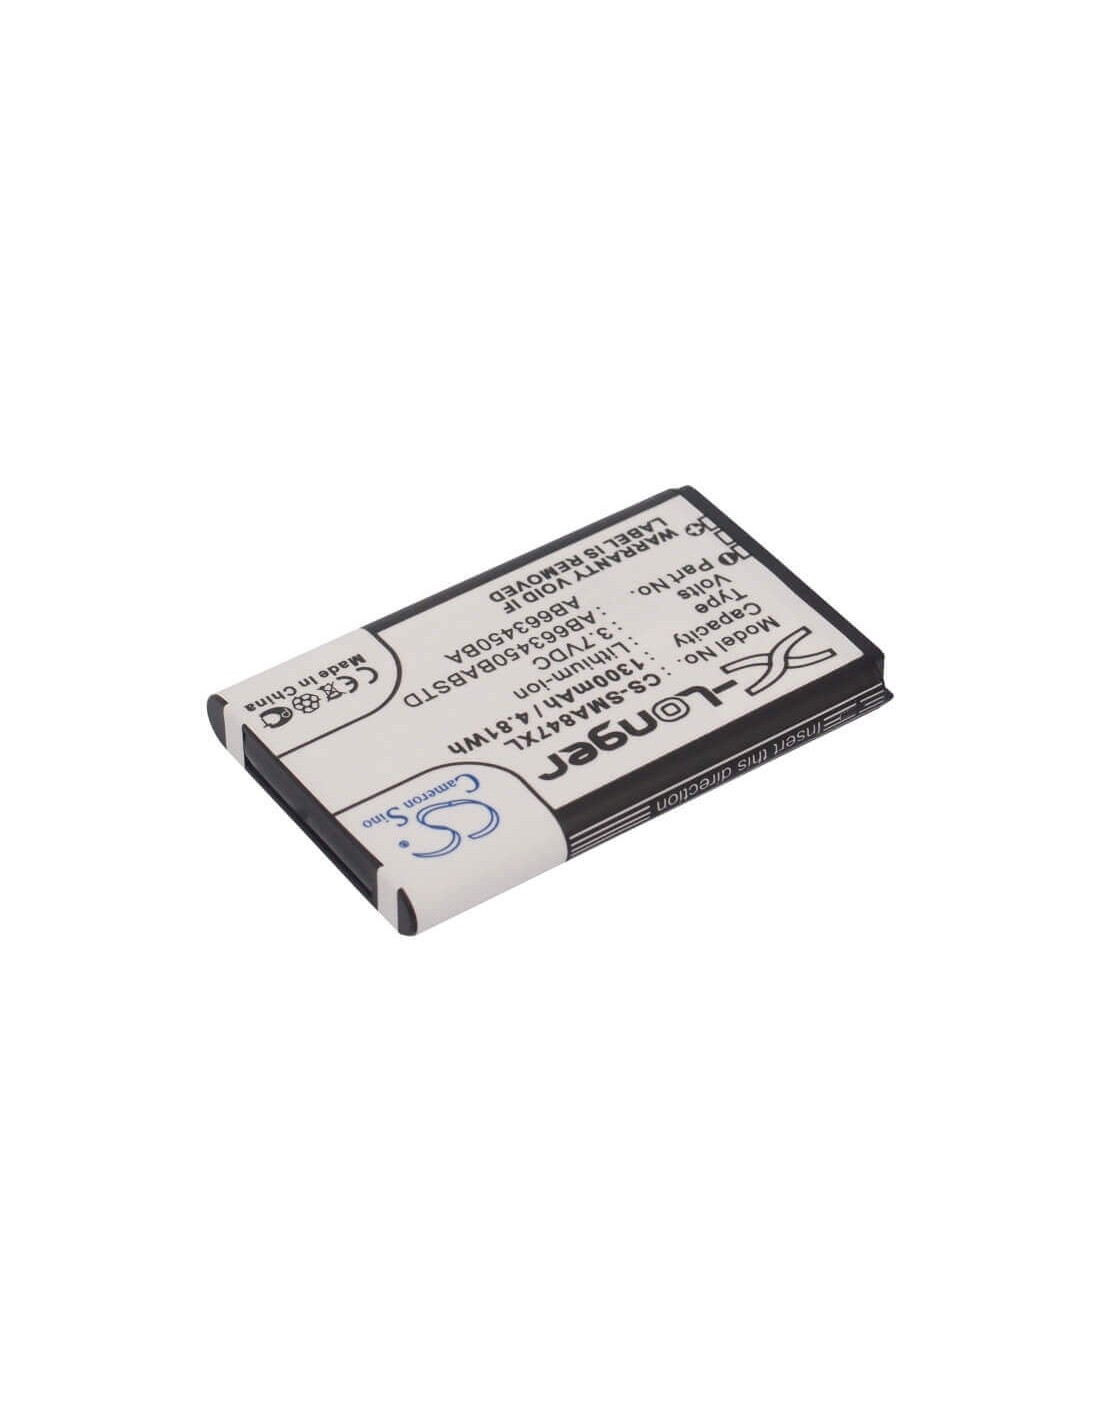 Battery for Samsung SGH-A847, Rugby II, Rugby II A847 3.7V, 1300mAh - 4.81Wh